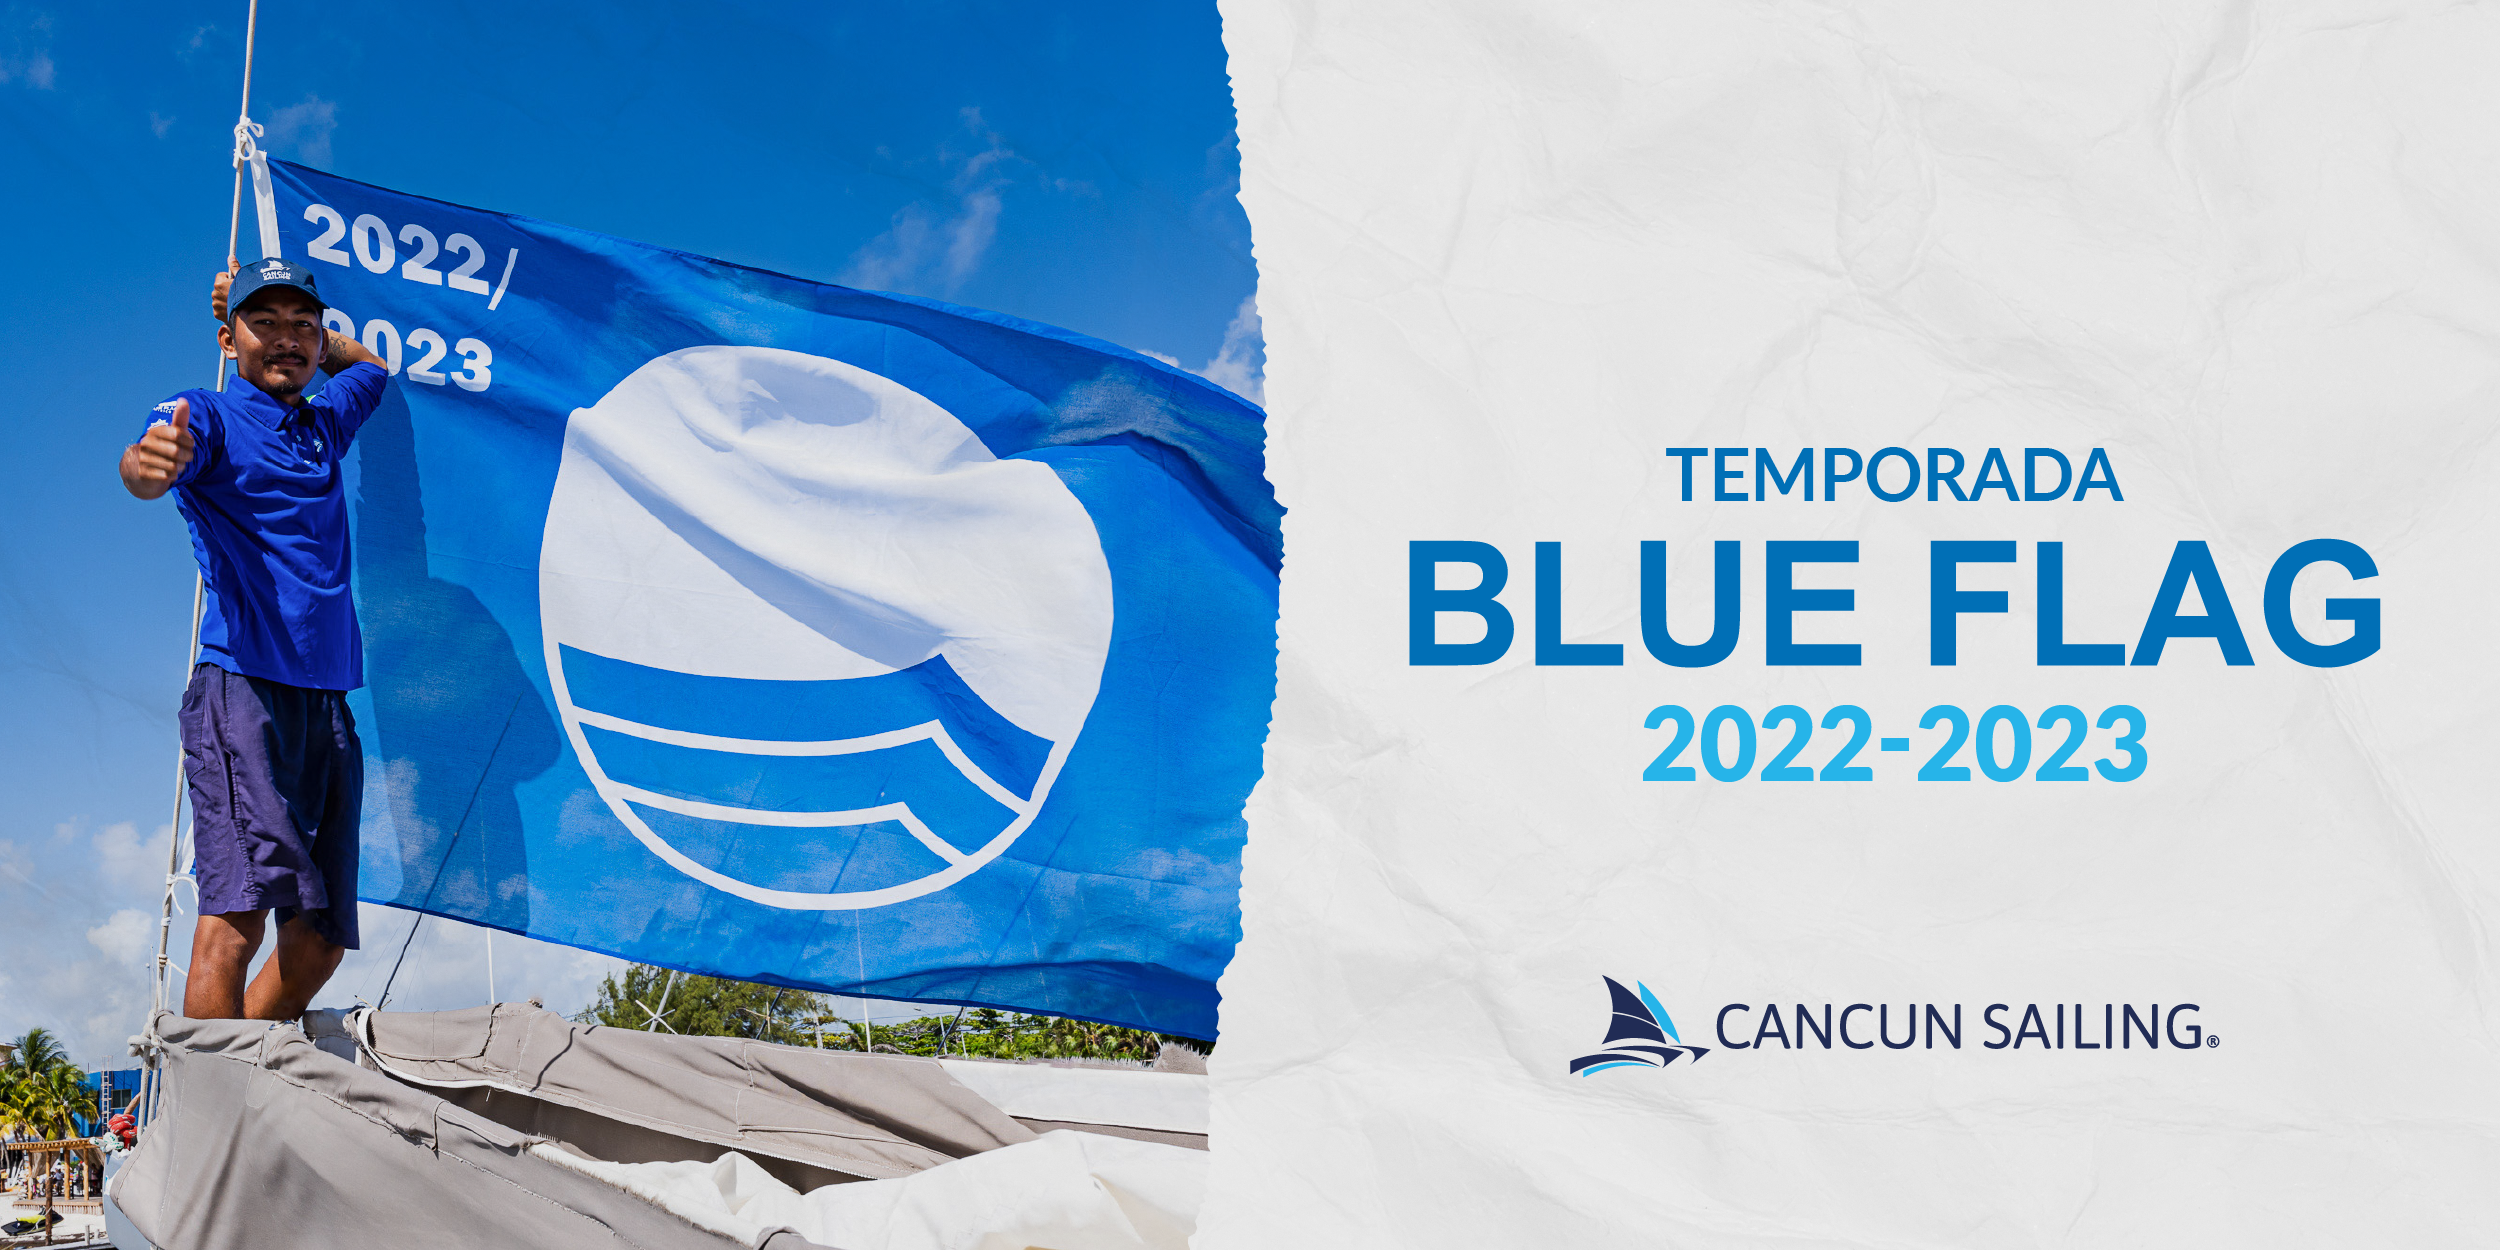 Temporada Blue Flag 2022-2023 Cancun Sailing